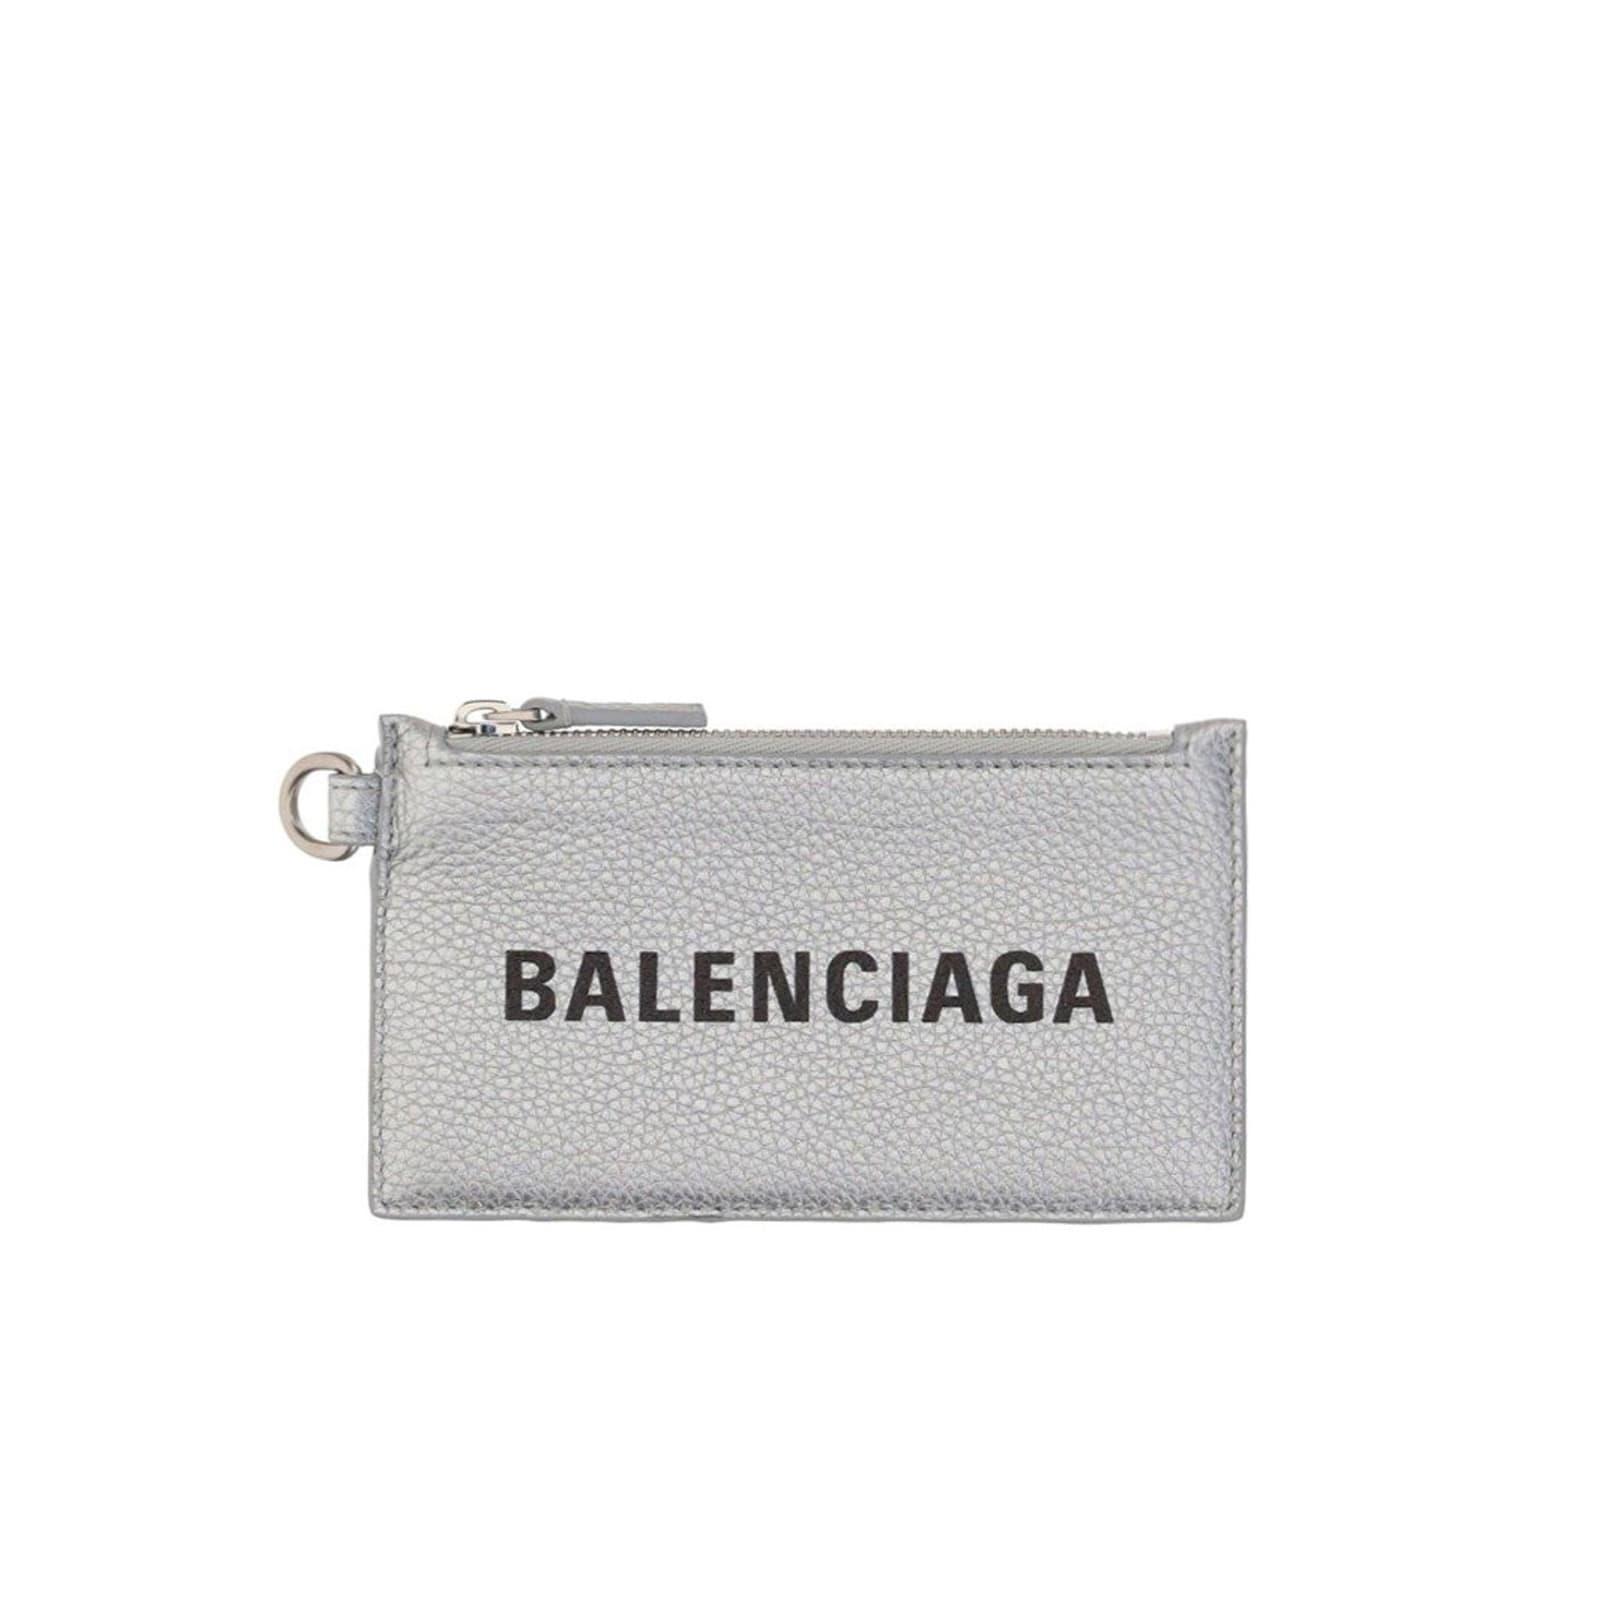 Balenciaga Leather Wallet in Gray | Lyst